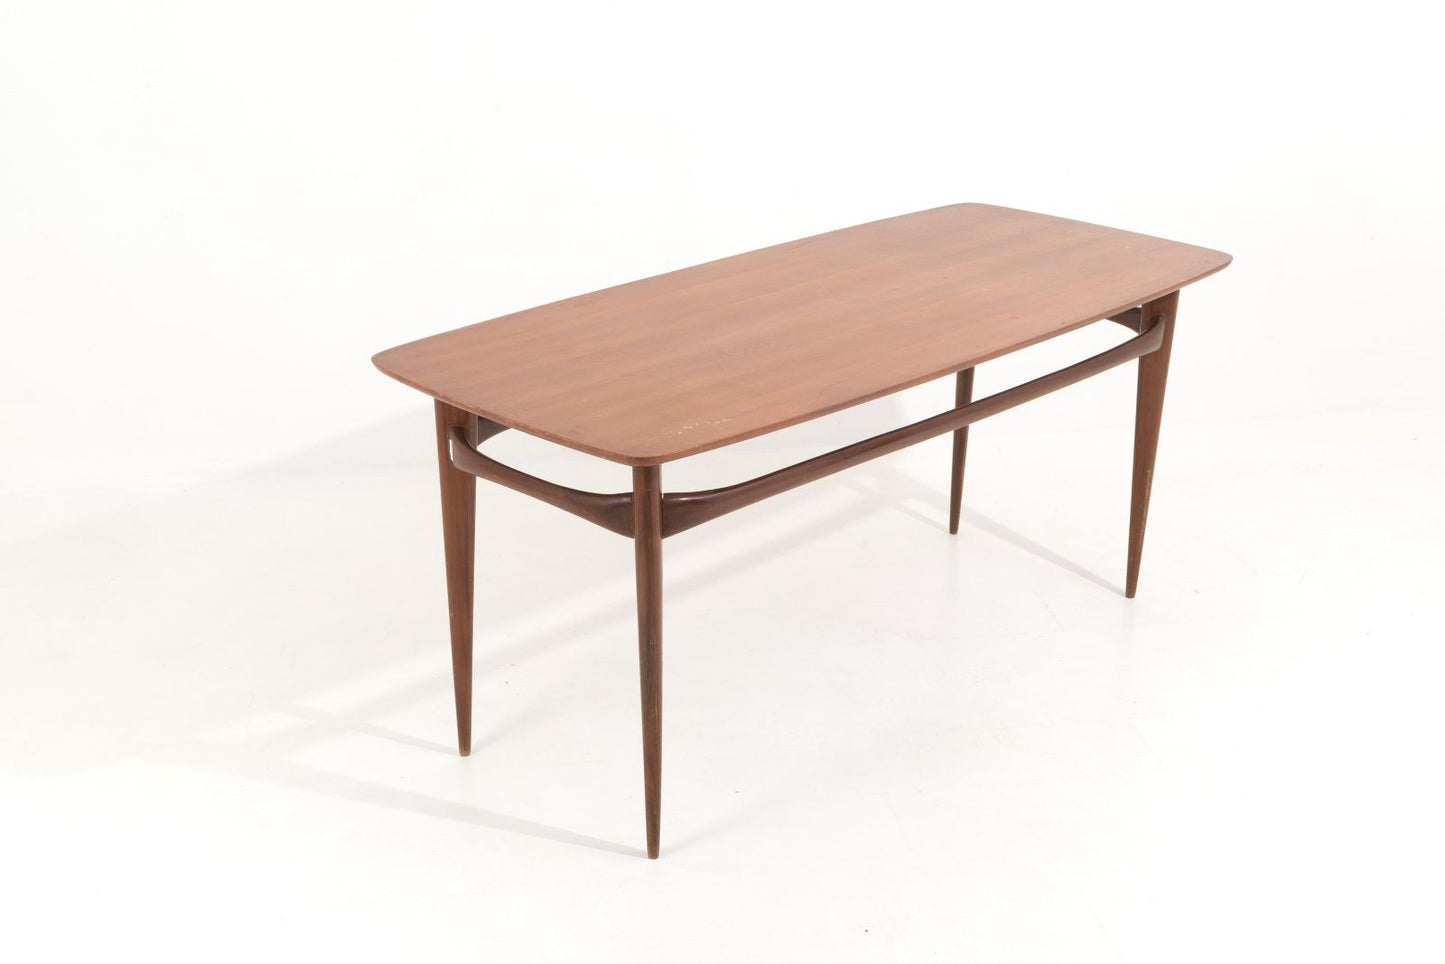 SILVIO CAVATORTA. Walnut table with veneered top, 60s